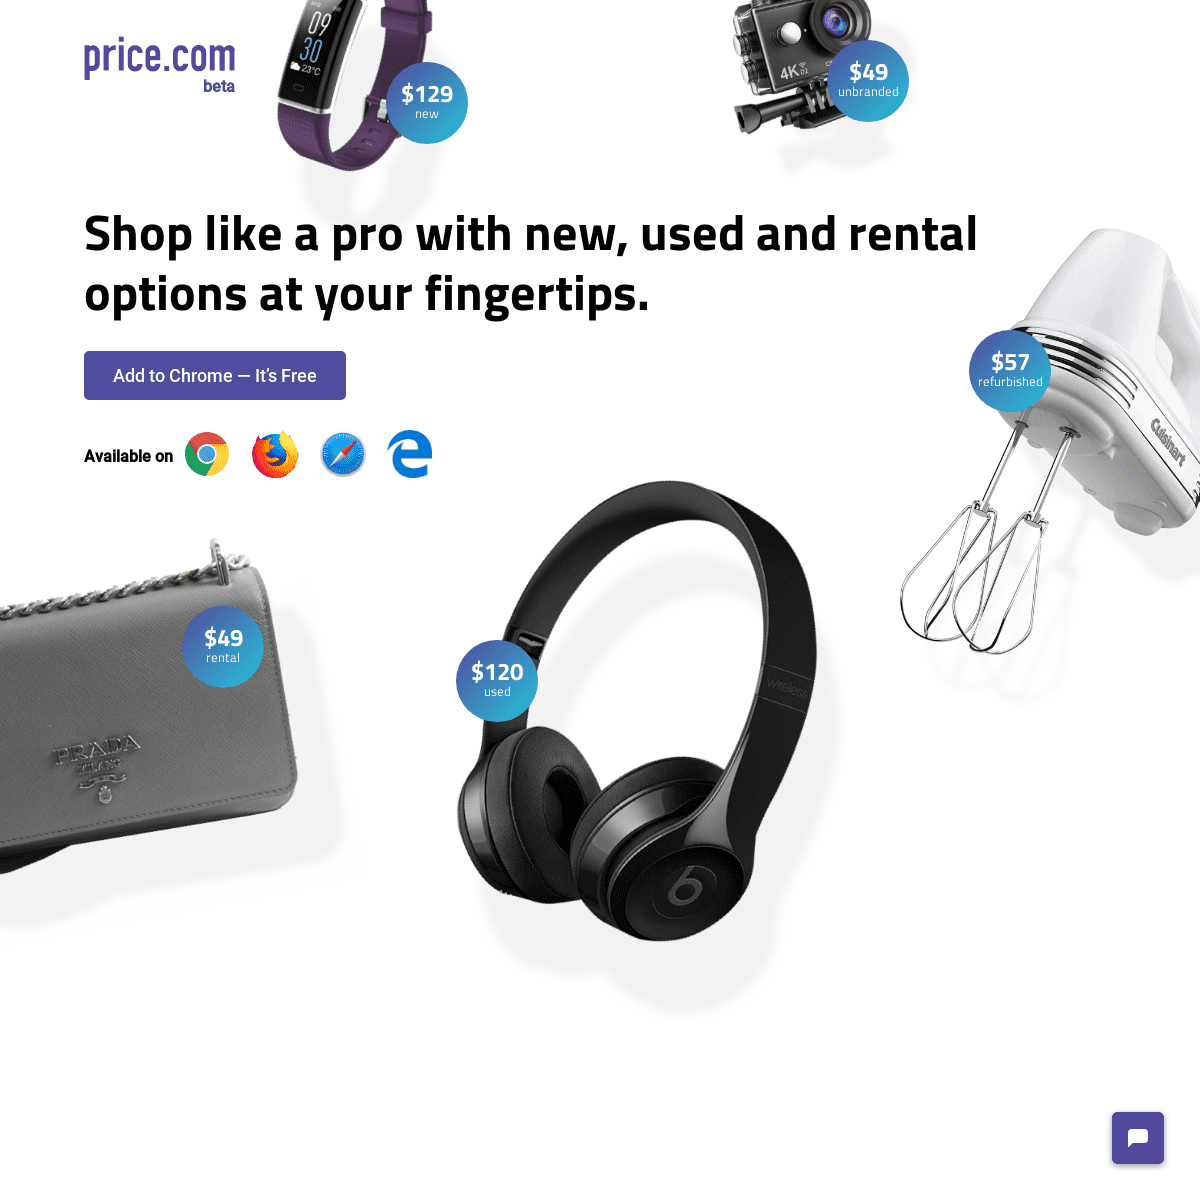 Price.com: Shop like a pro